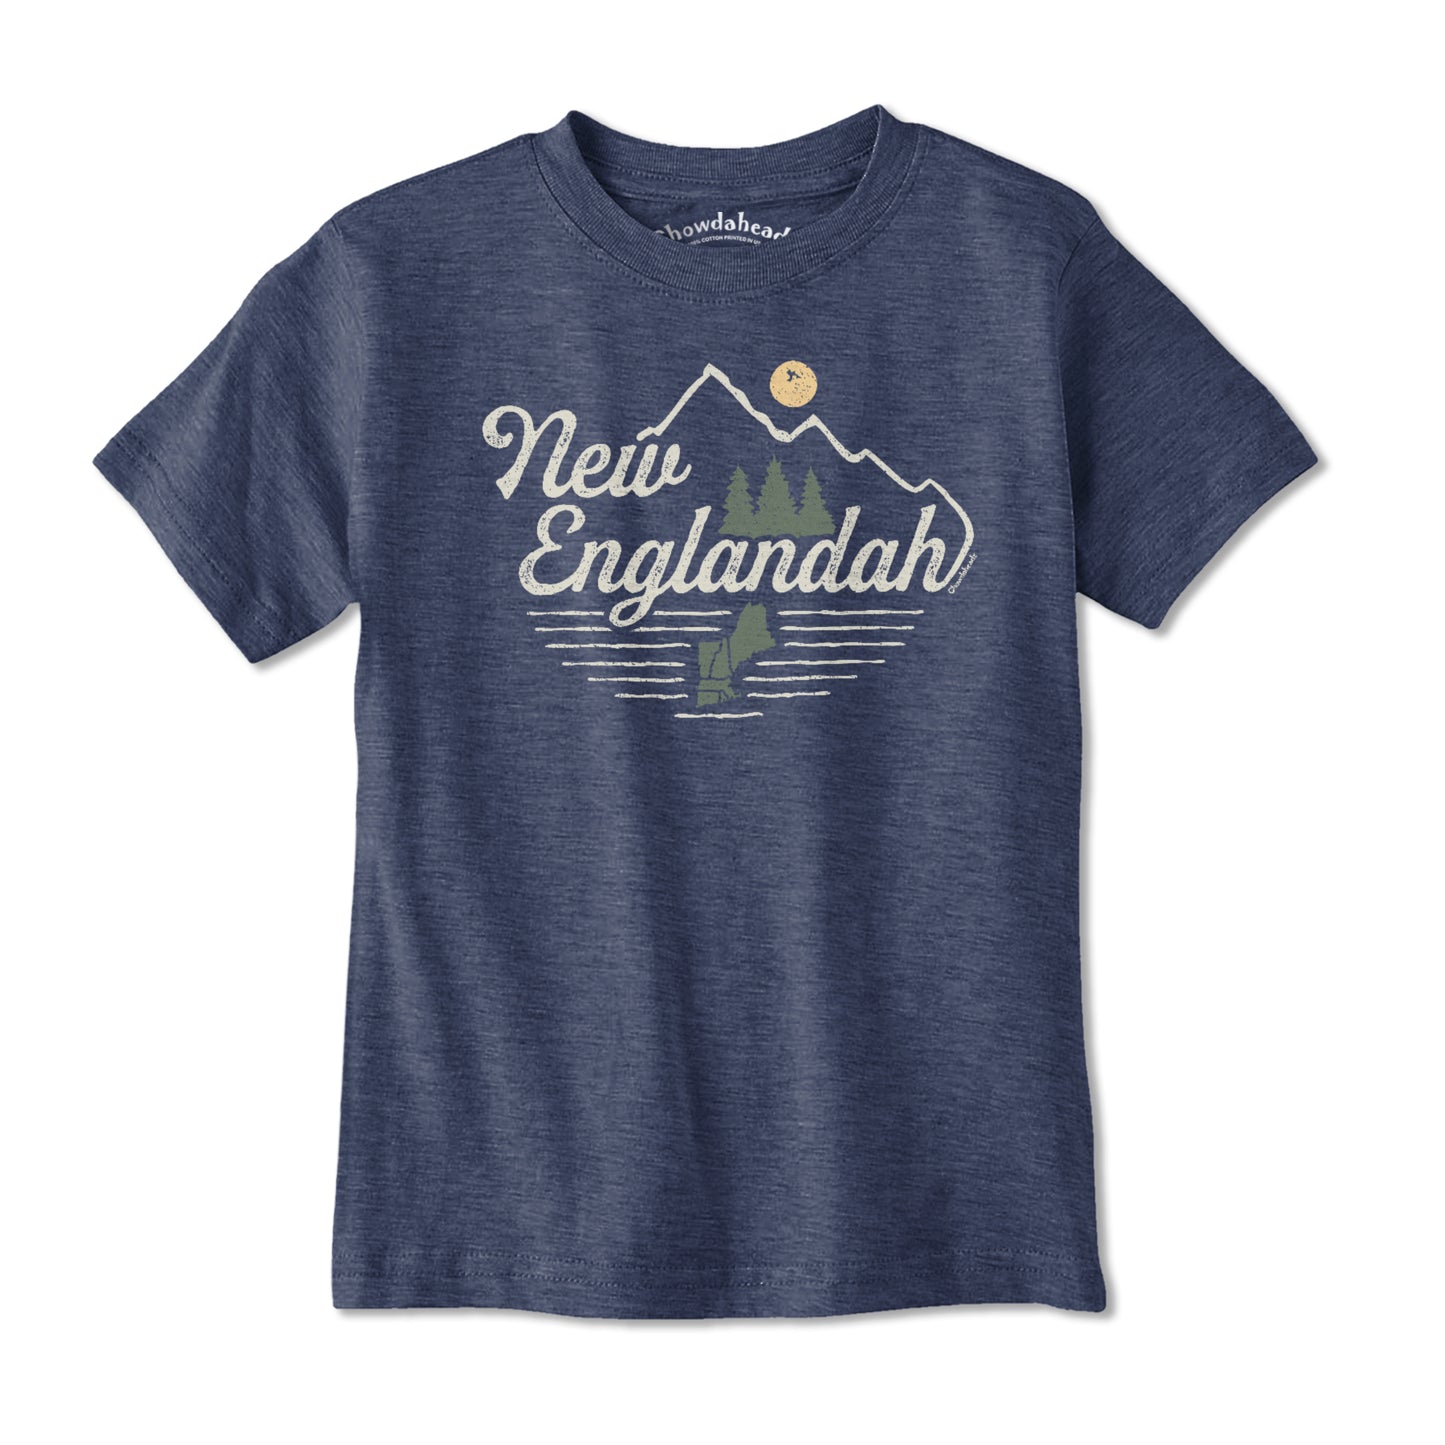 New Englandah Youth T-Shirt - Chowdaheadz